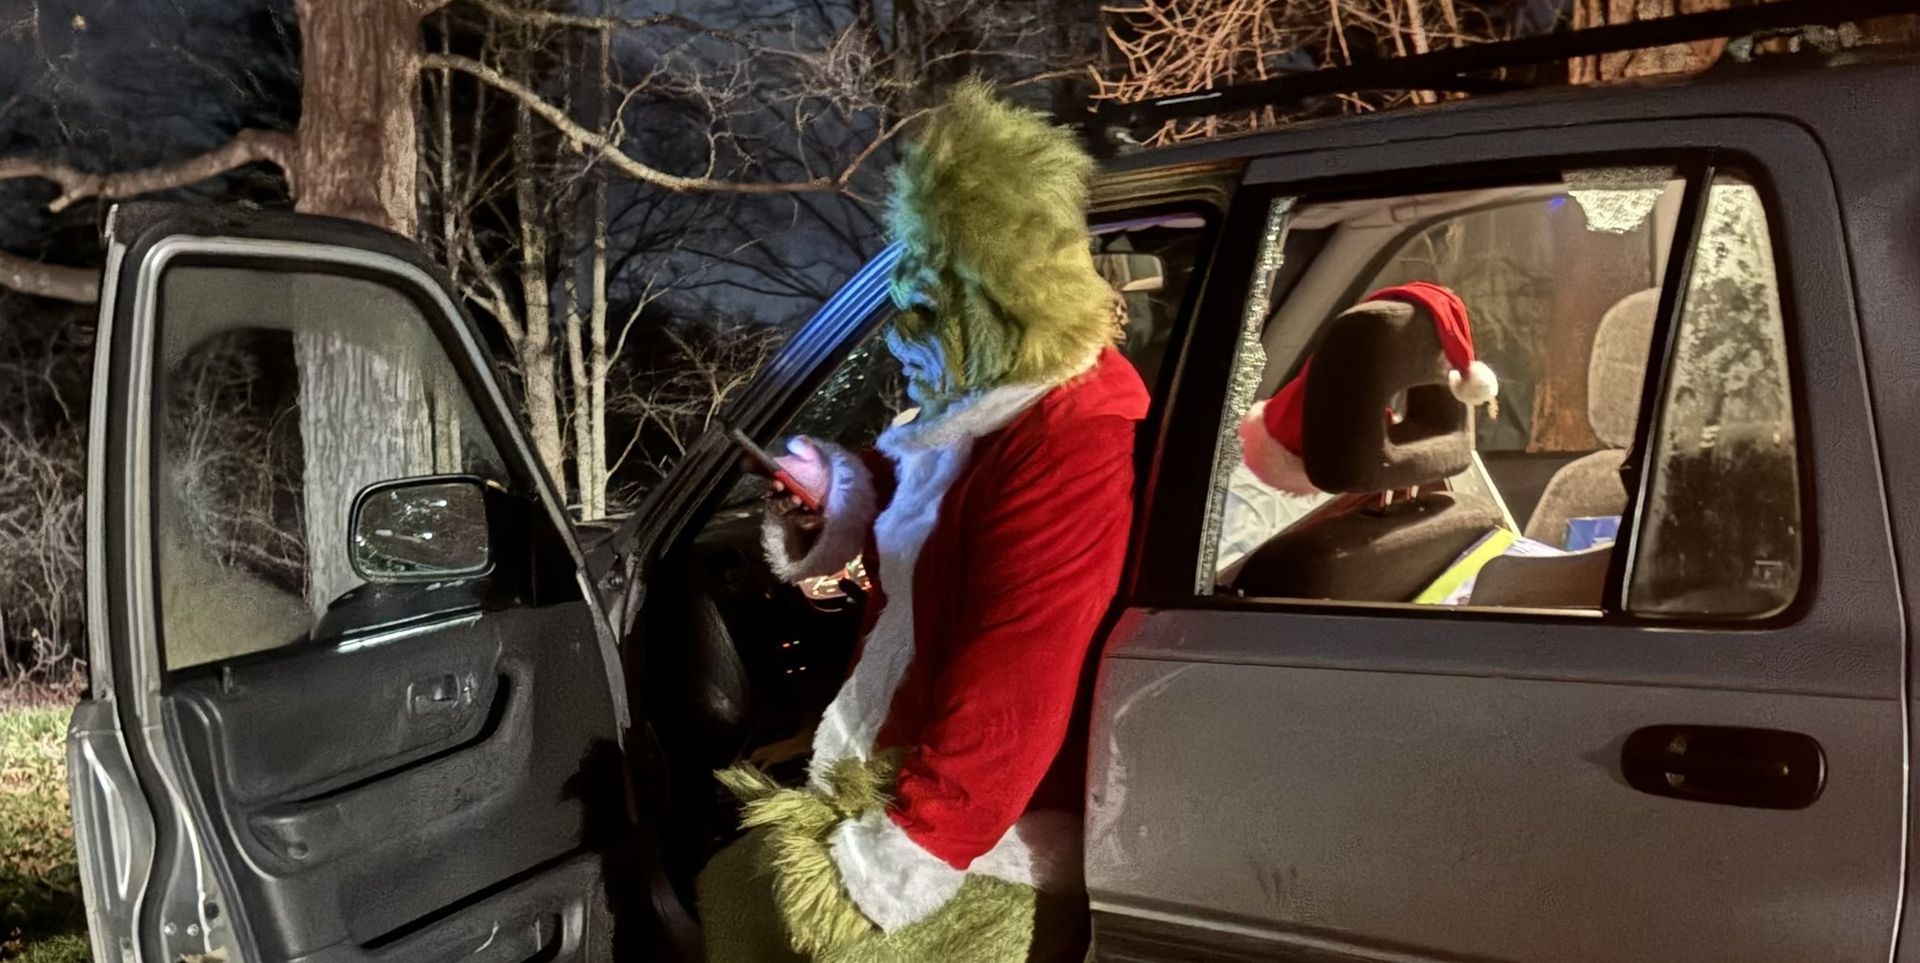 Man Dressed as Grinch Crashes Car on Christmas Night